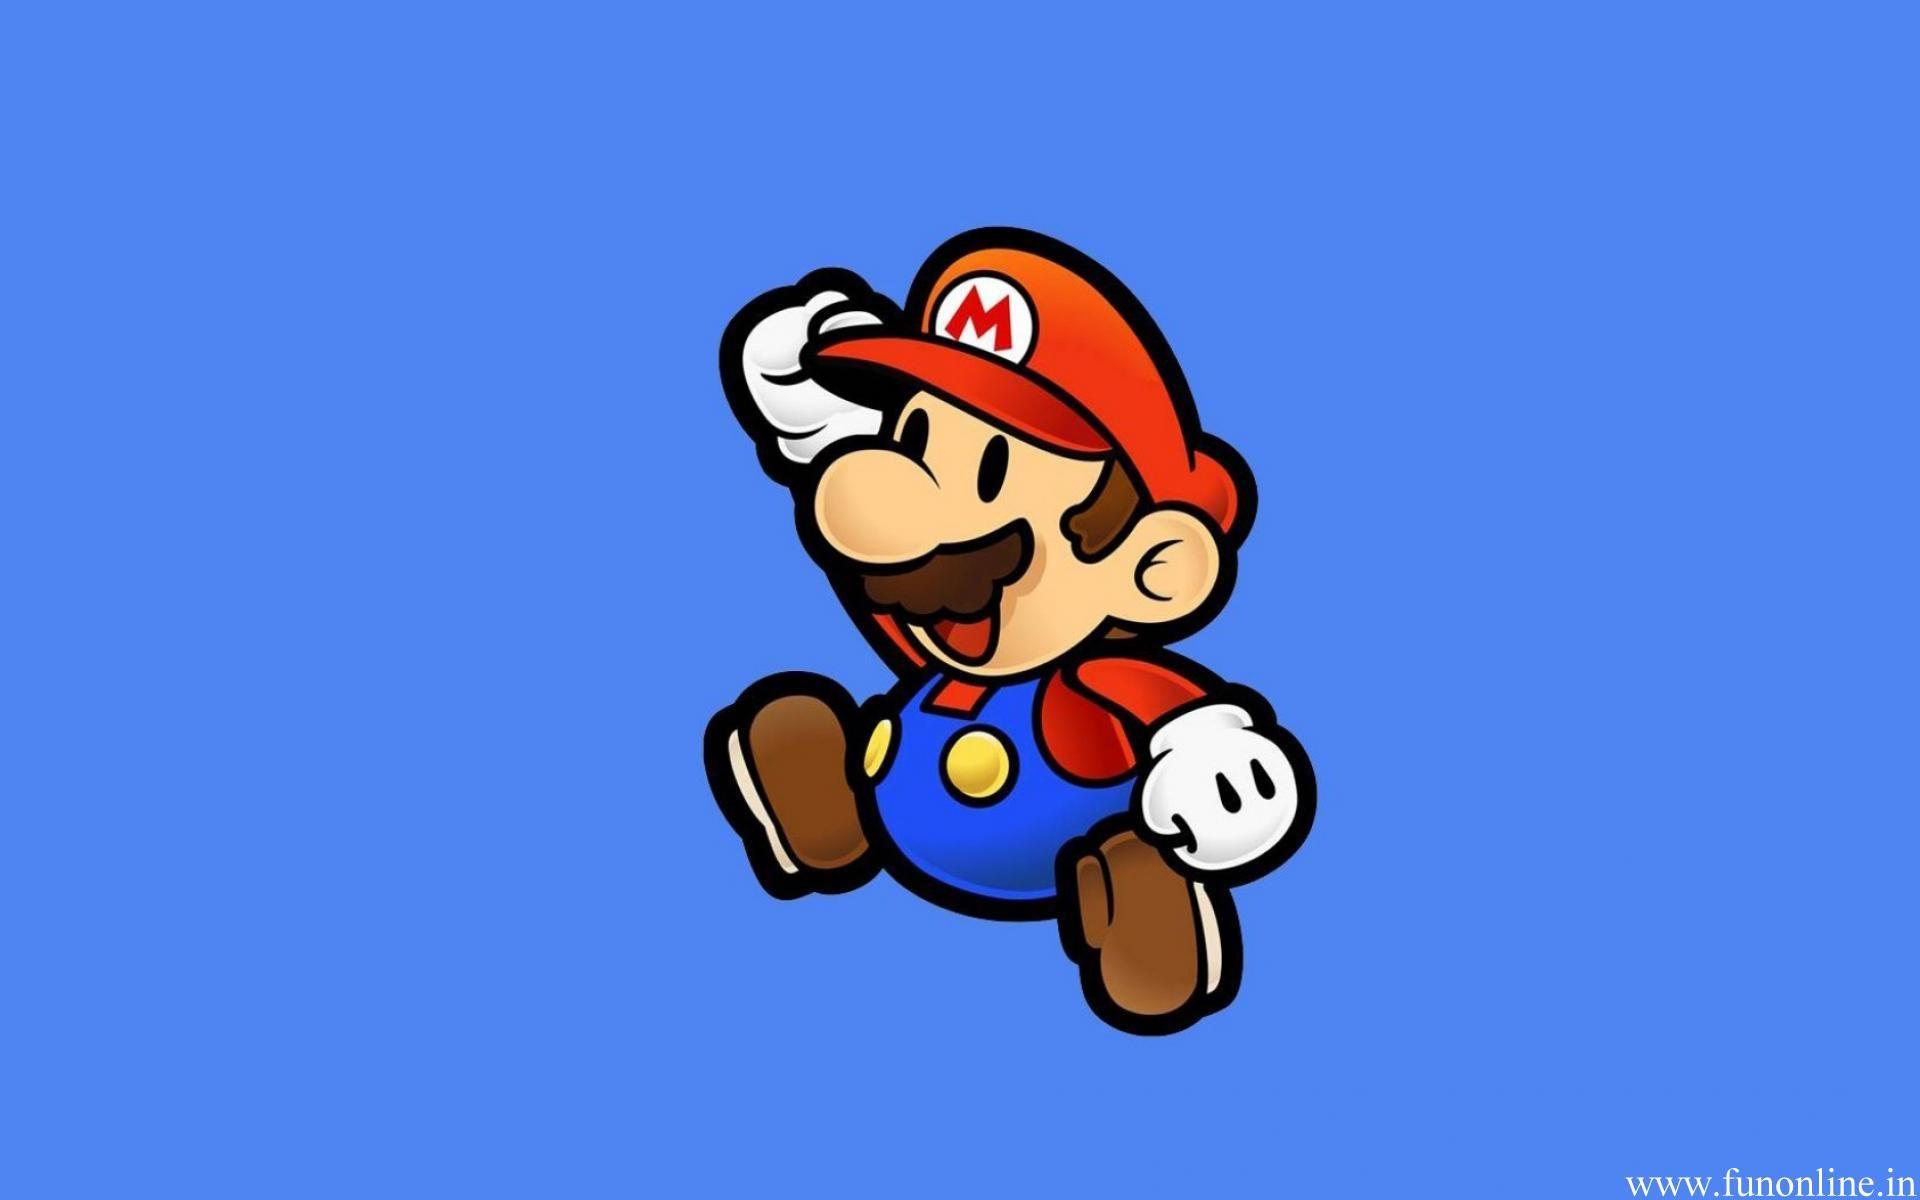 1920x1200px 69.37 KB Mario Wallpaper